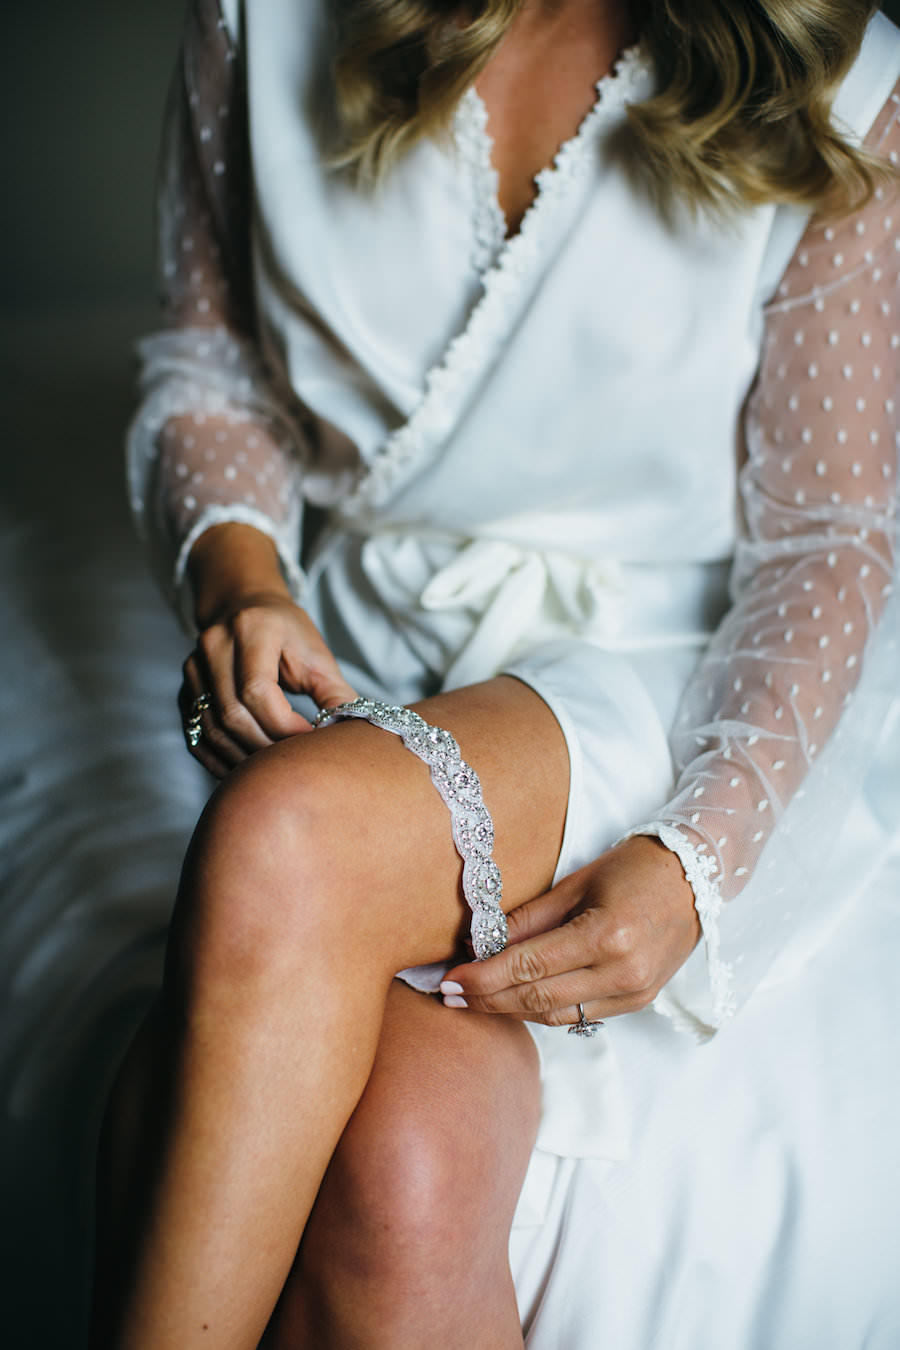 Bridal Getting Ready Wedding Portrait in White Lace Robe Putting On Rhinestone Garter Belt